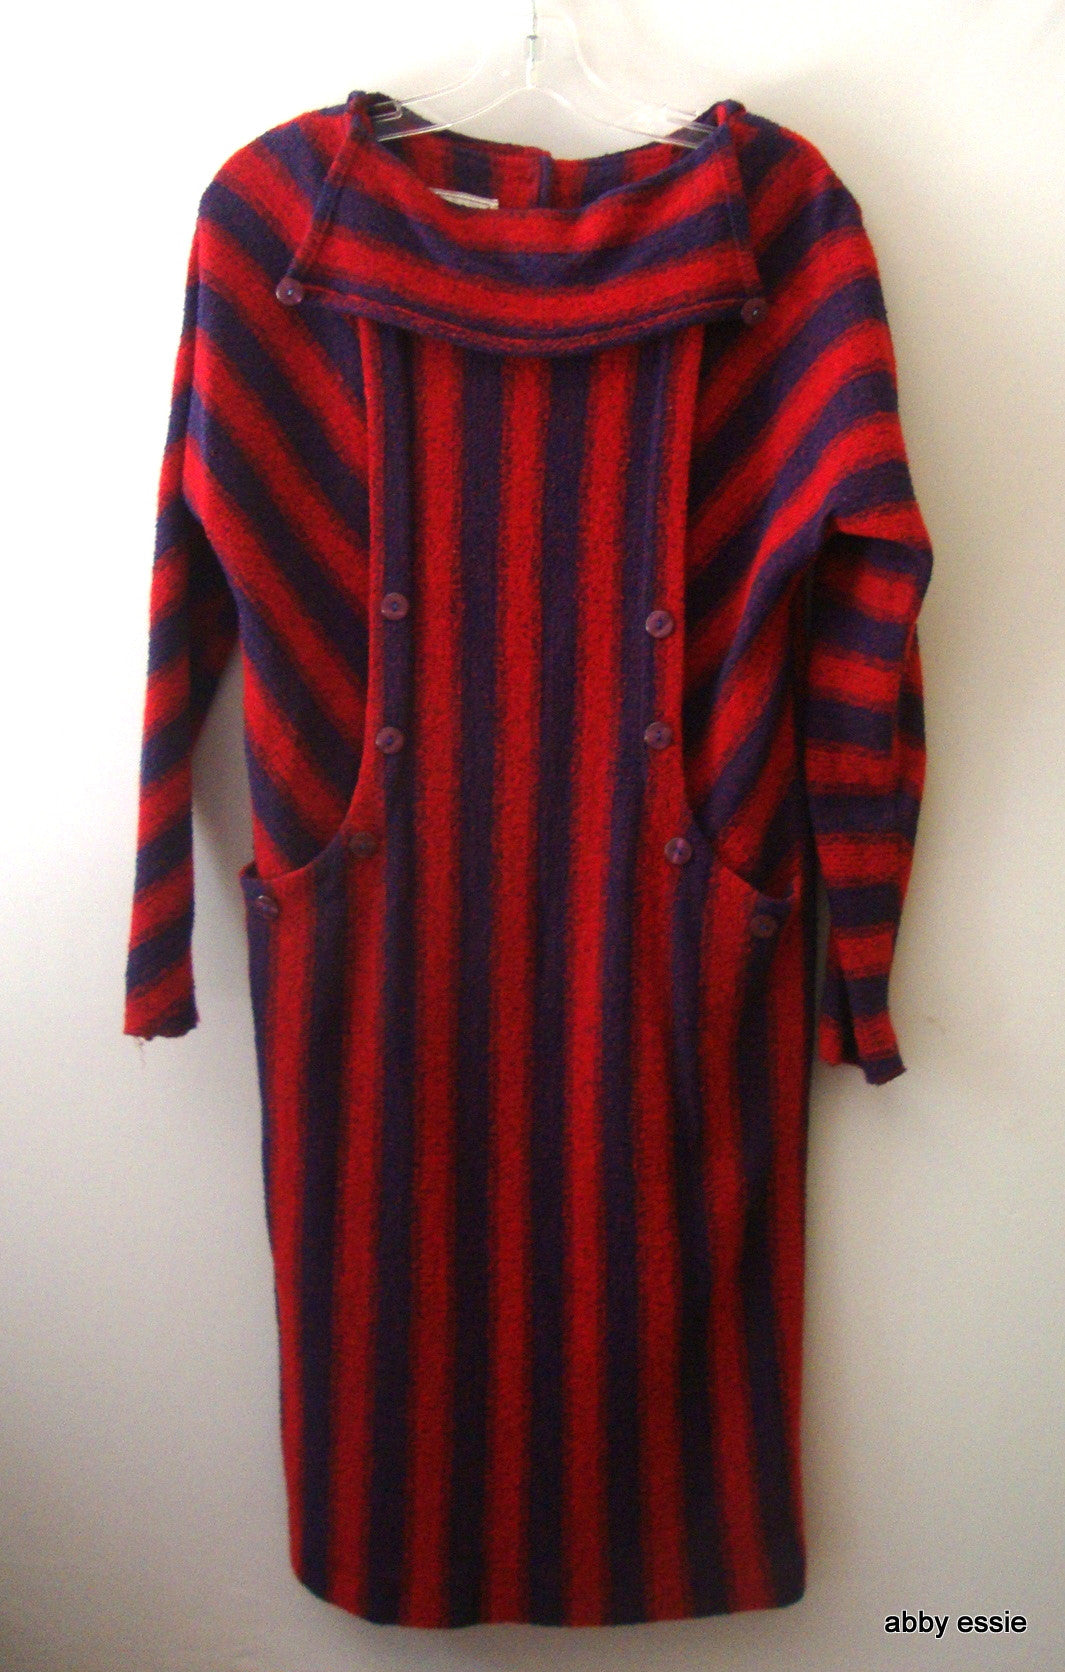 Rare Vintage Antique Striped Wool Knit Peasant Festival Dress